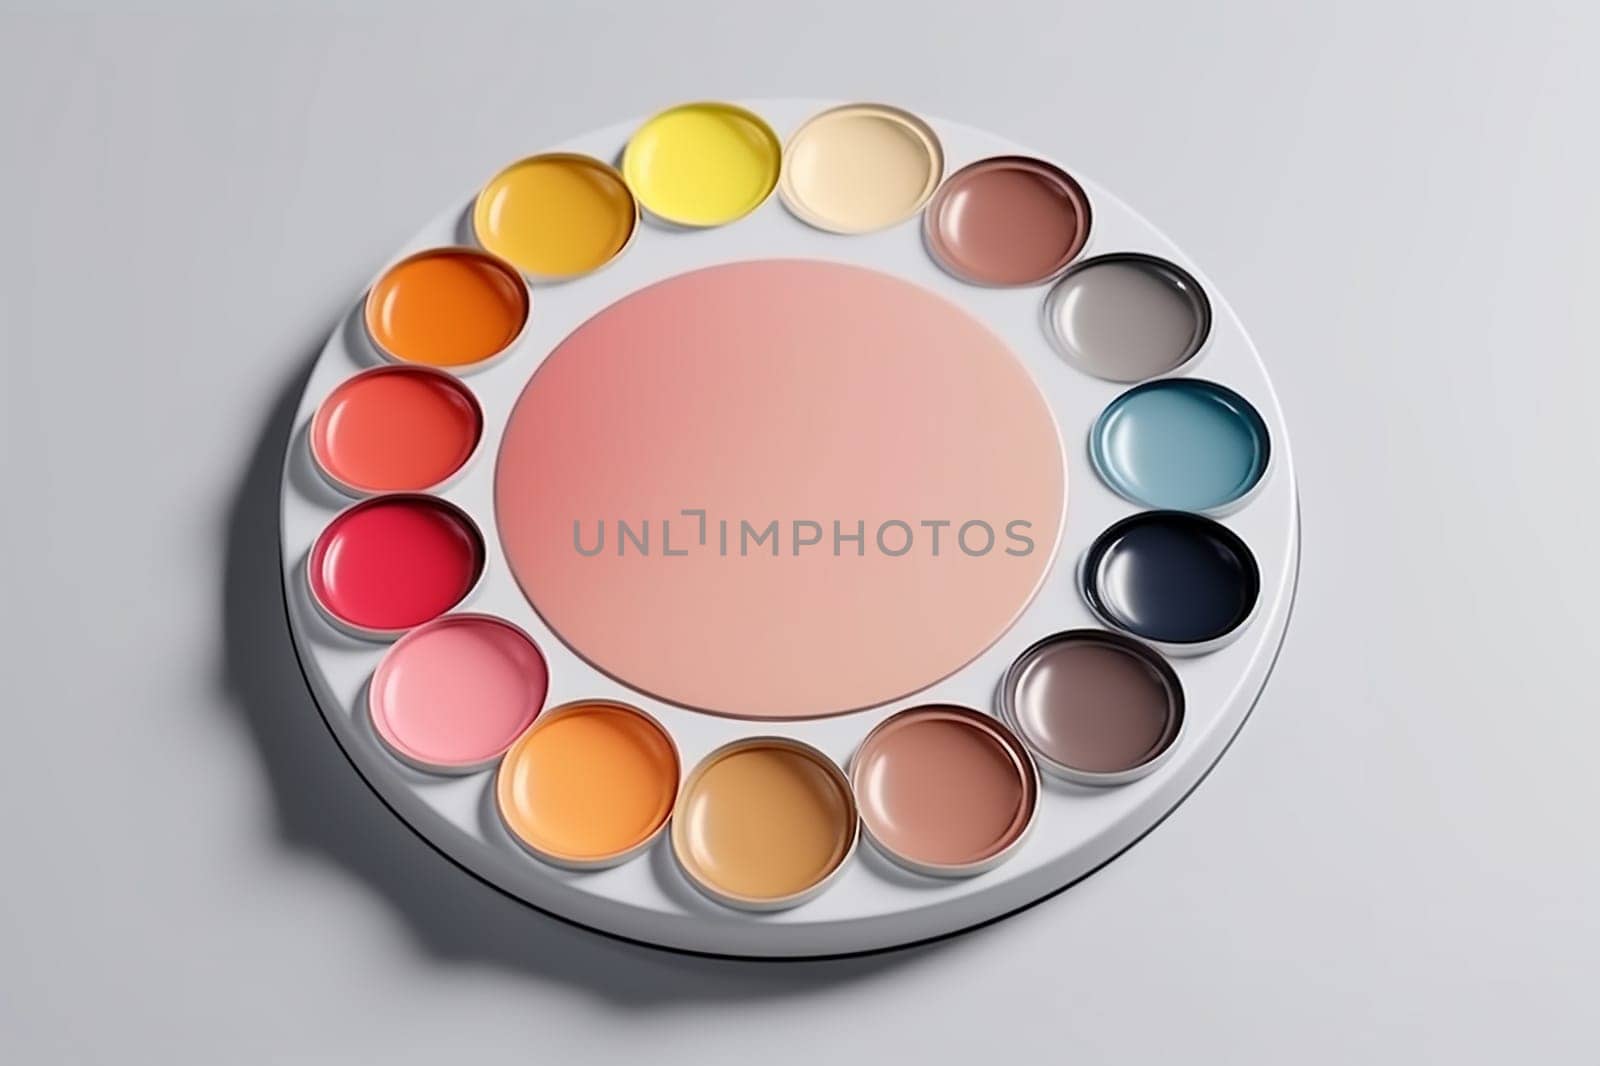 Assorted colorful makeup palette against a plain background.